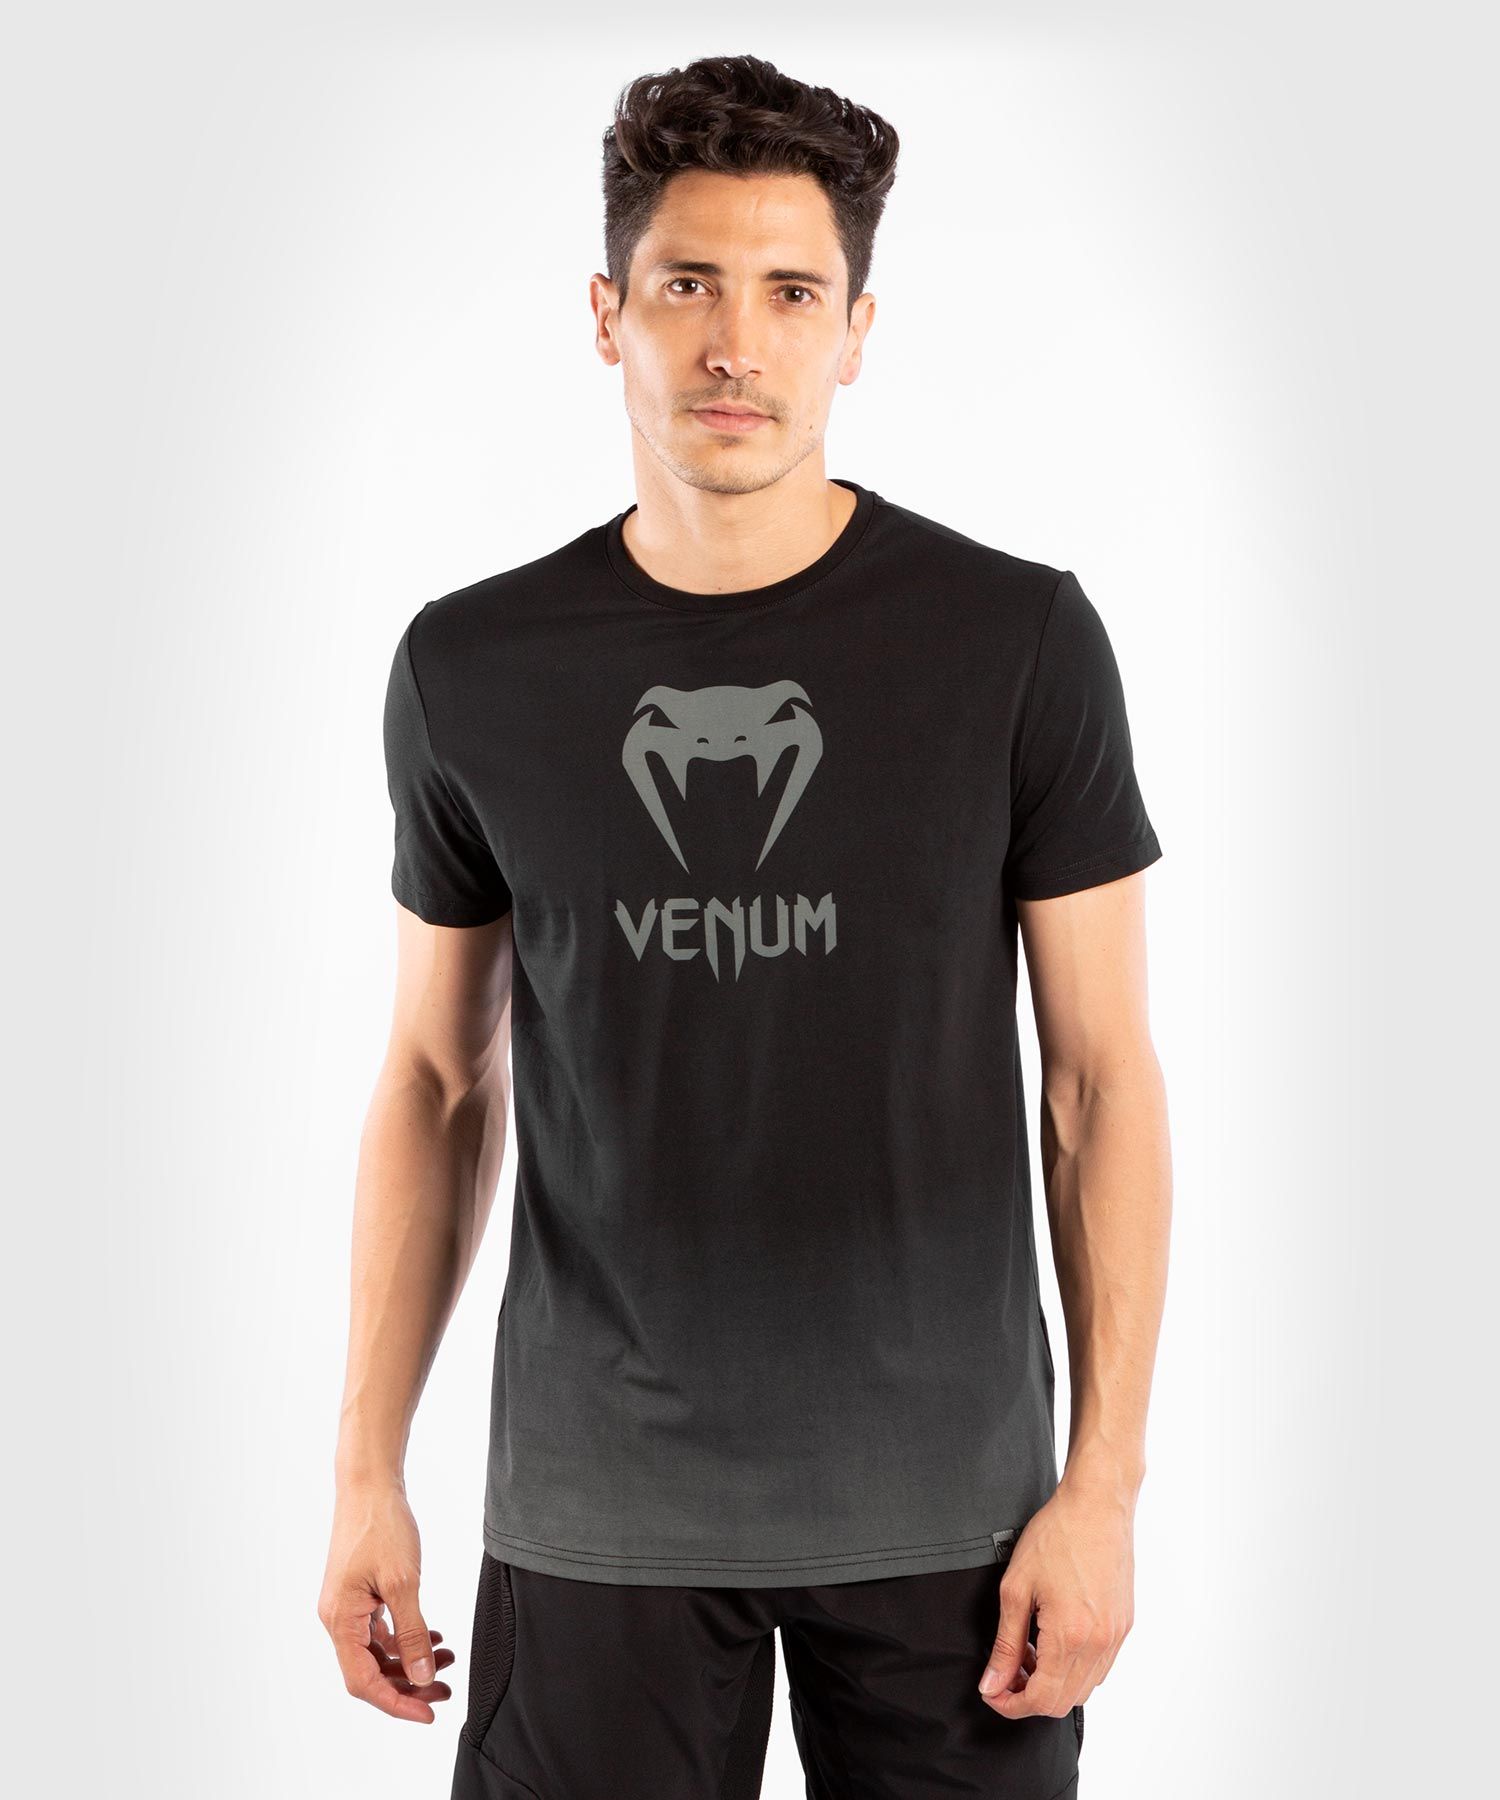 Venum Classic T-shirt - Black/Dark Grey